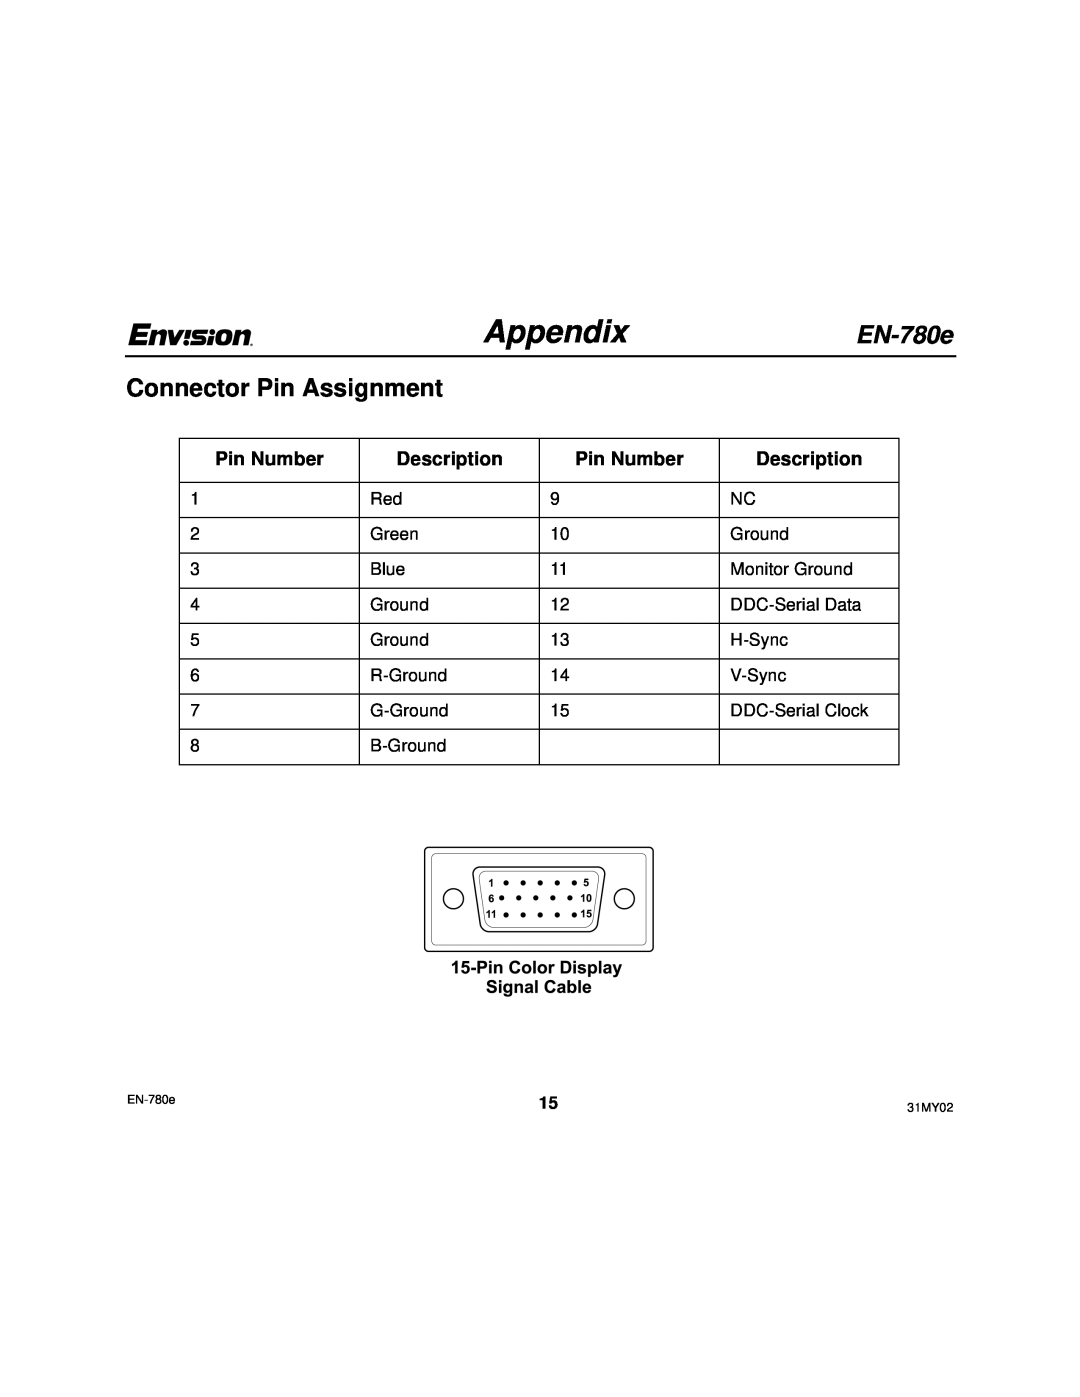 Envision Peripherals user manual Connector Pin Assignment, Pin Number, Description, AppendixEN-780e 